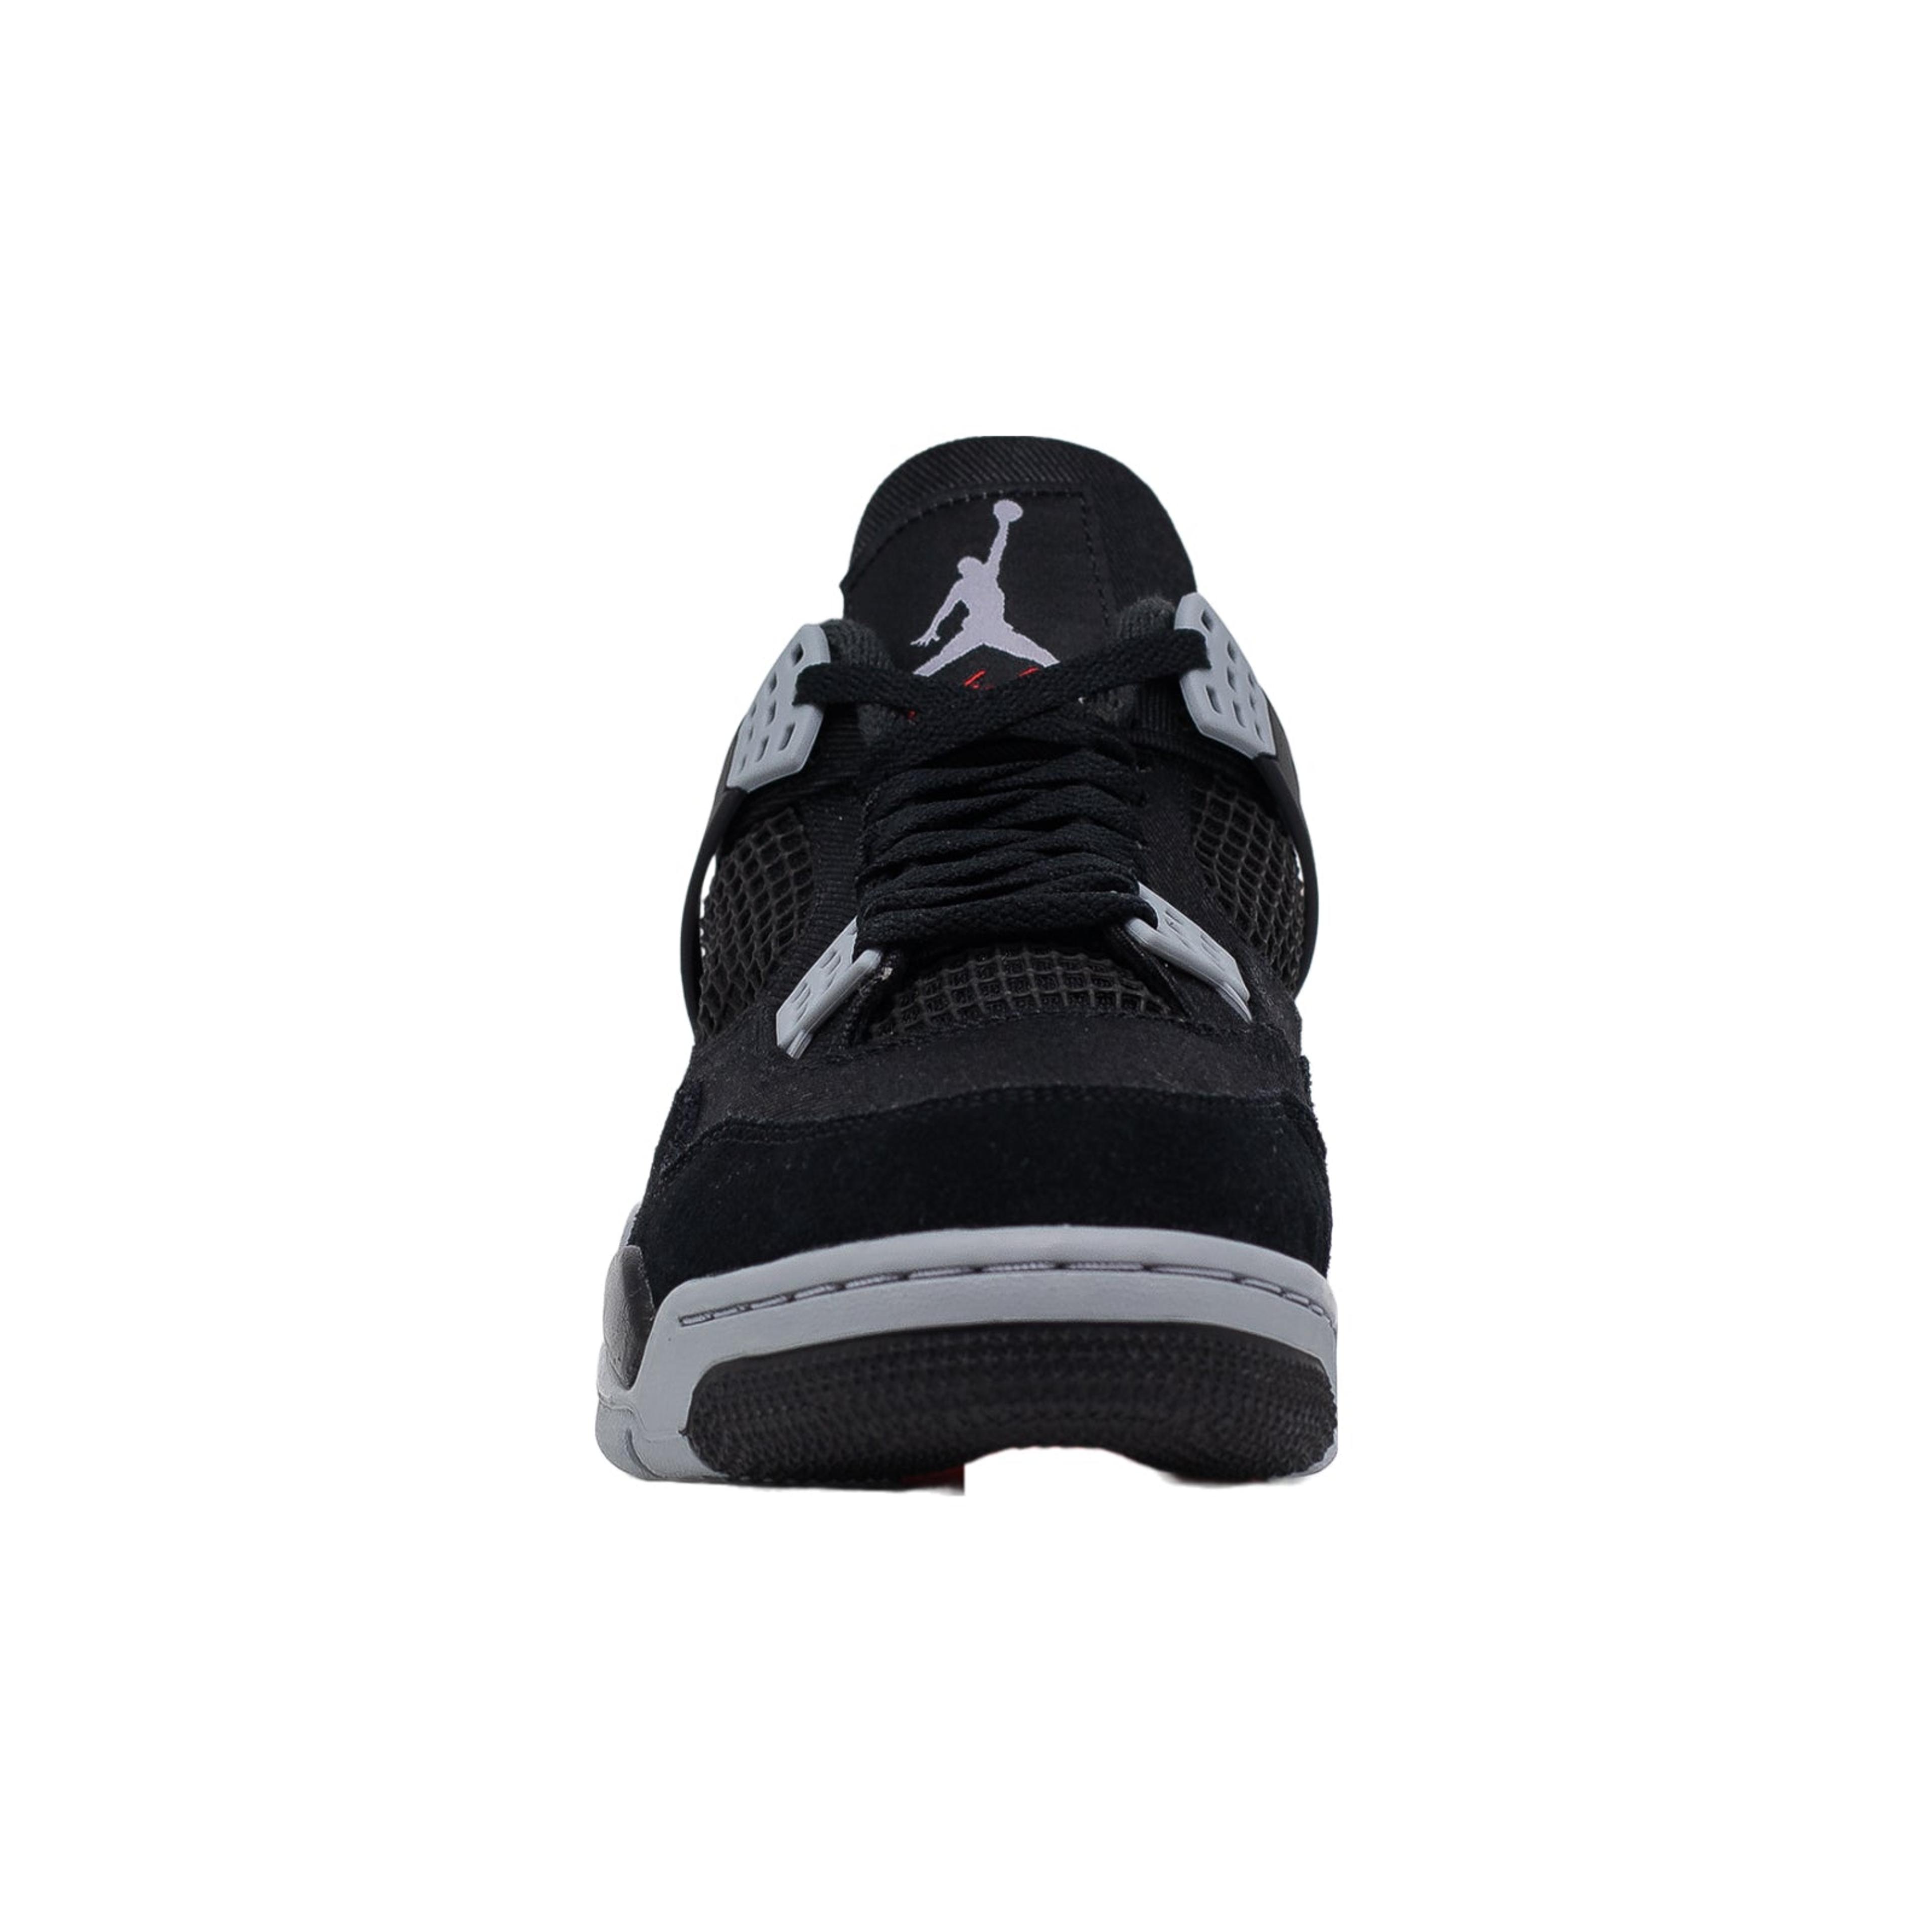 Alternate View 2 of Air Jordan 4, Black Canvas